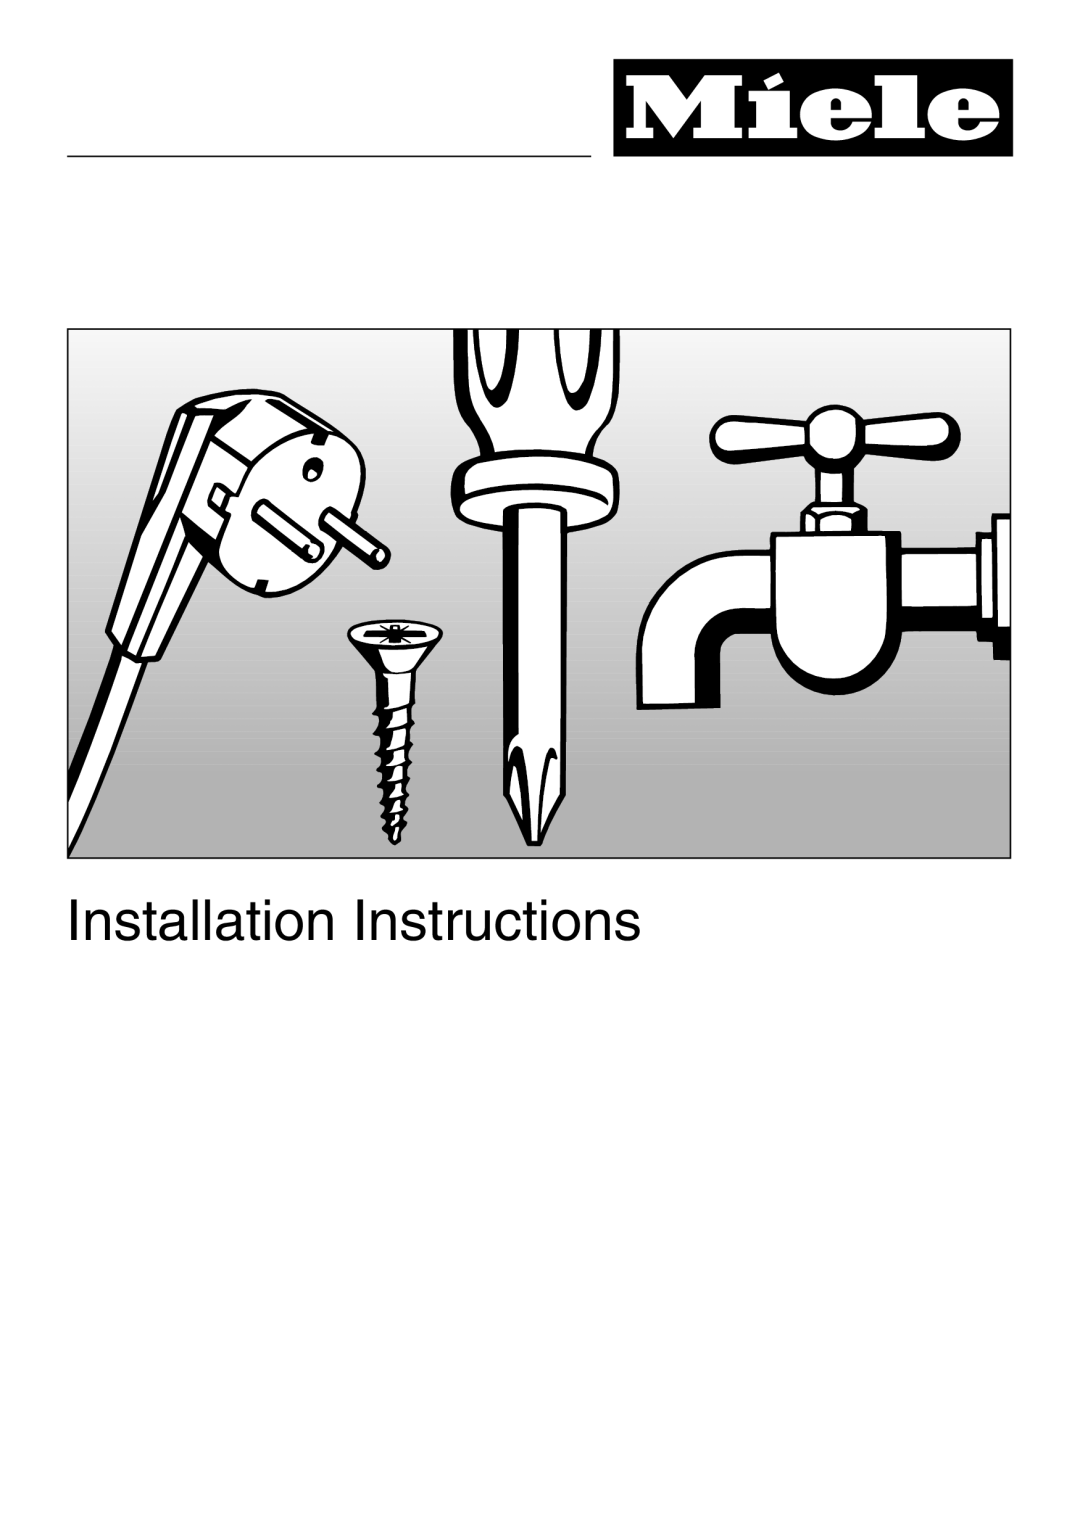 Miele 09 798 350 installation instructions Installation Instructions 